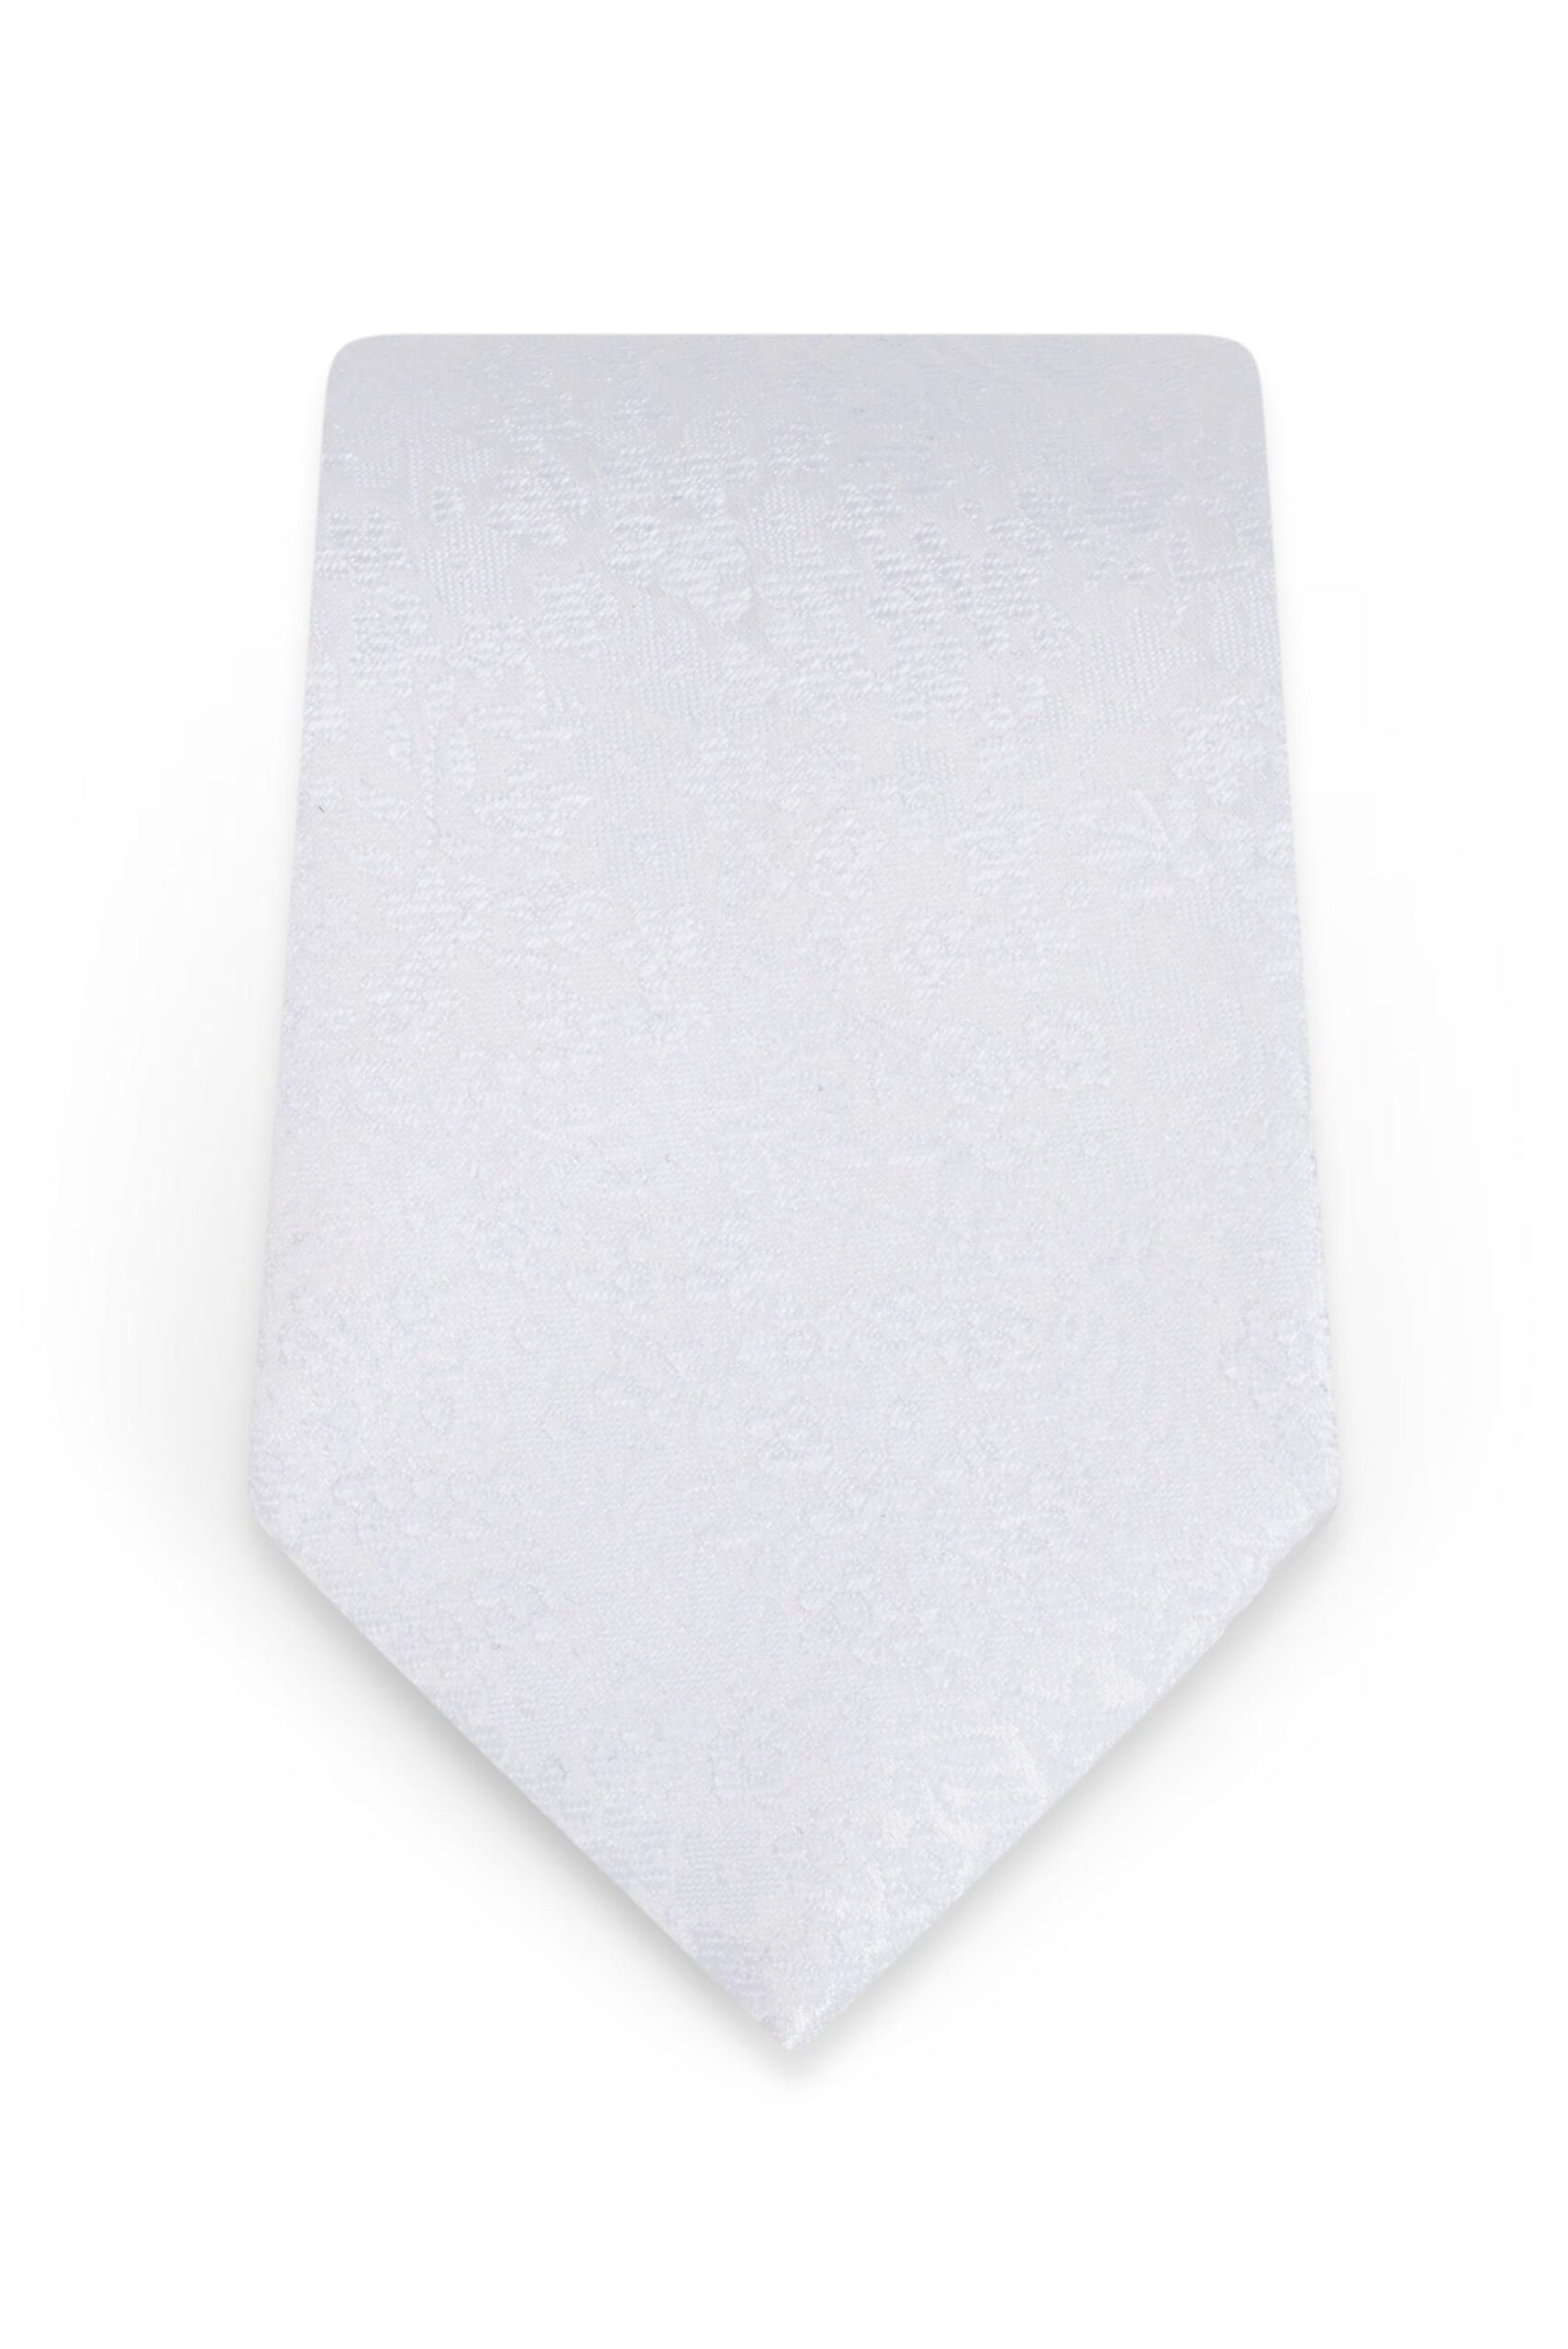 Floral White Self-Tie Windsor Tie